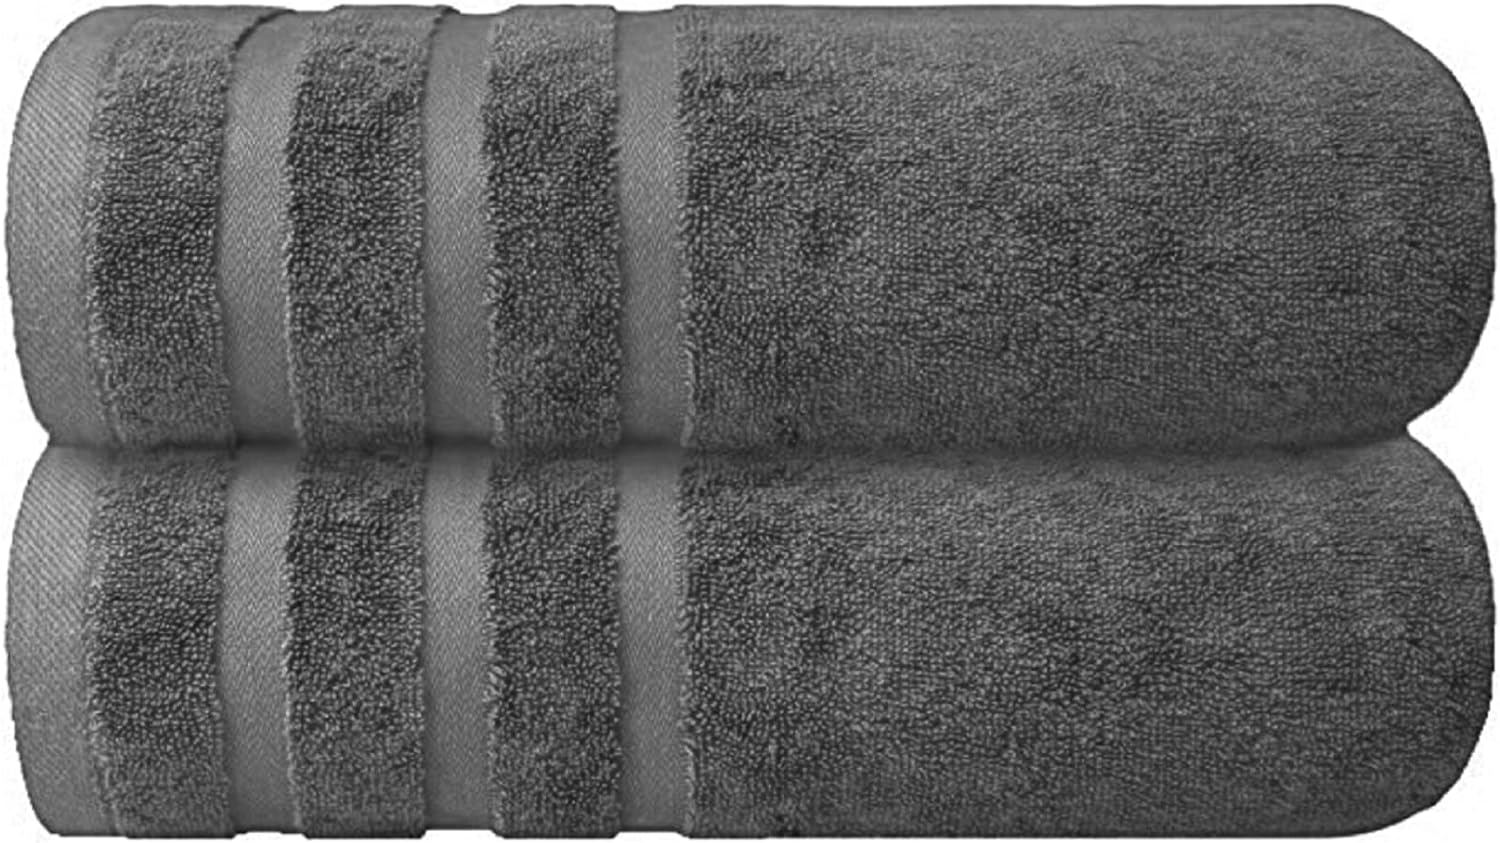 Extra Large Bath Sheets Towels 75 x 150cm 100% Egyptian Cotton Bath Towels 600GSM